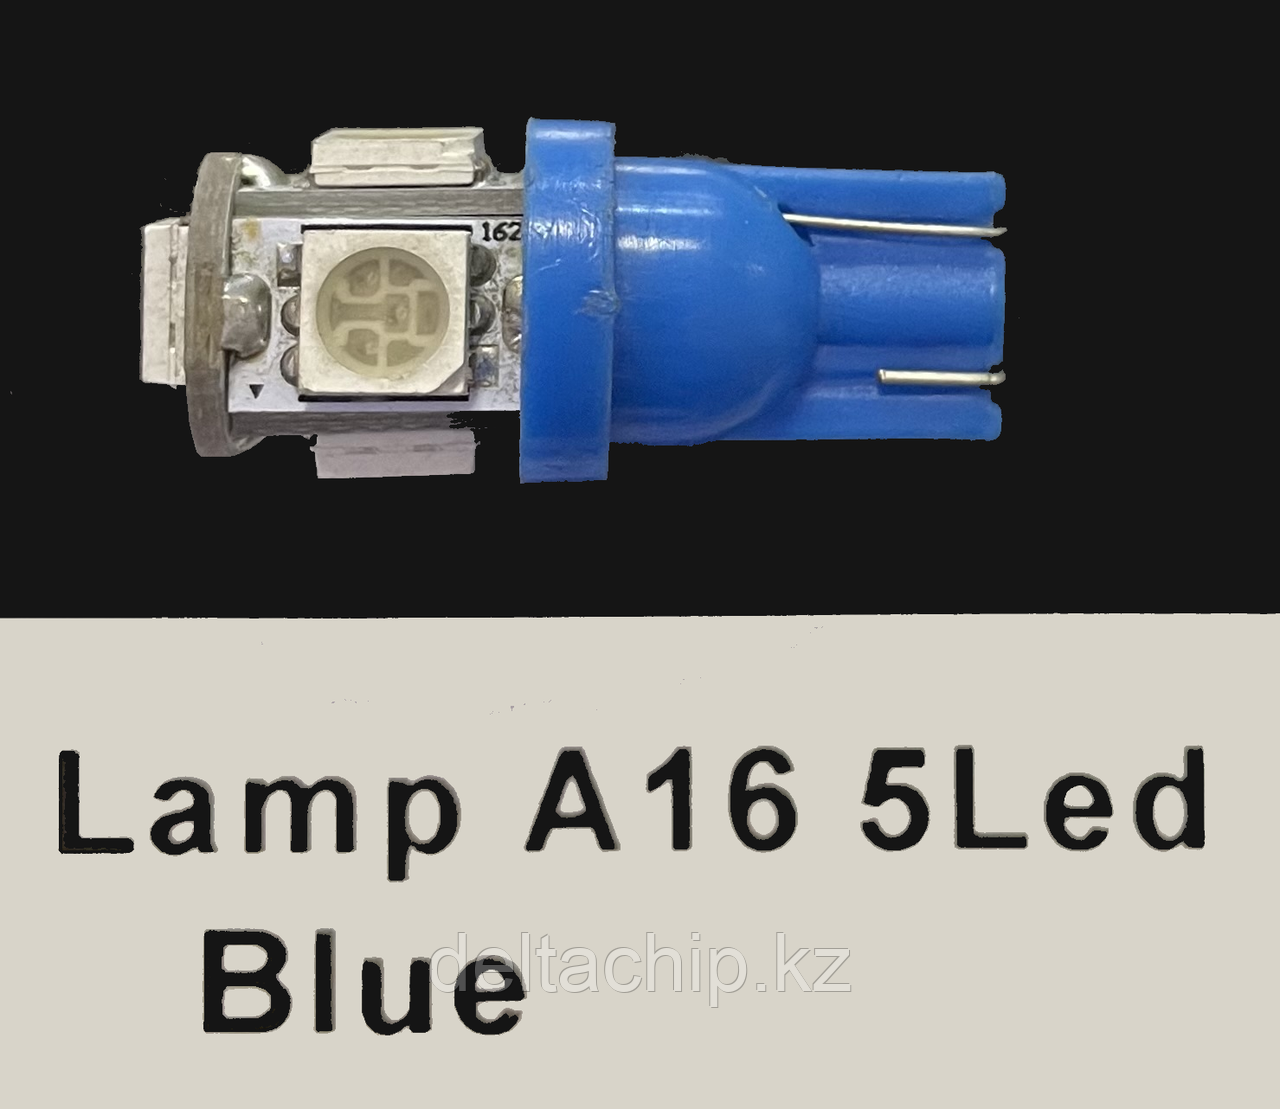 LAMP A16 BL